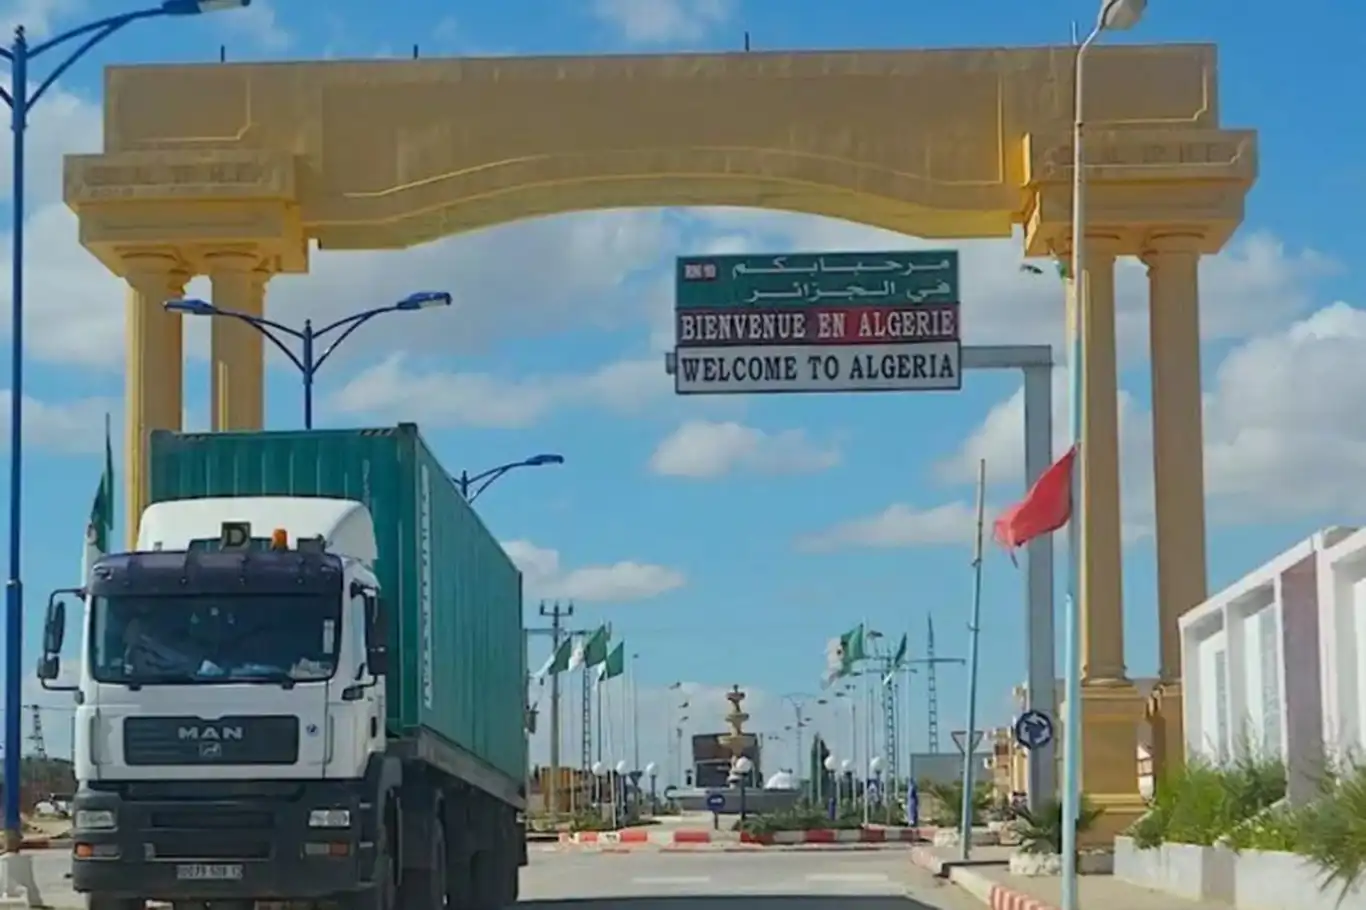 Algeria and Mauritania launch free trade zone project near border